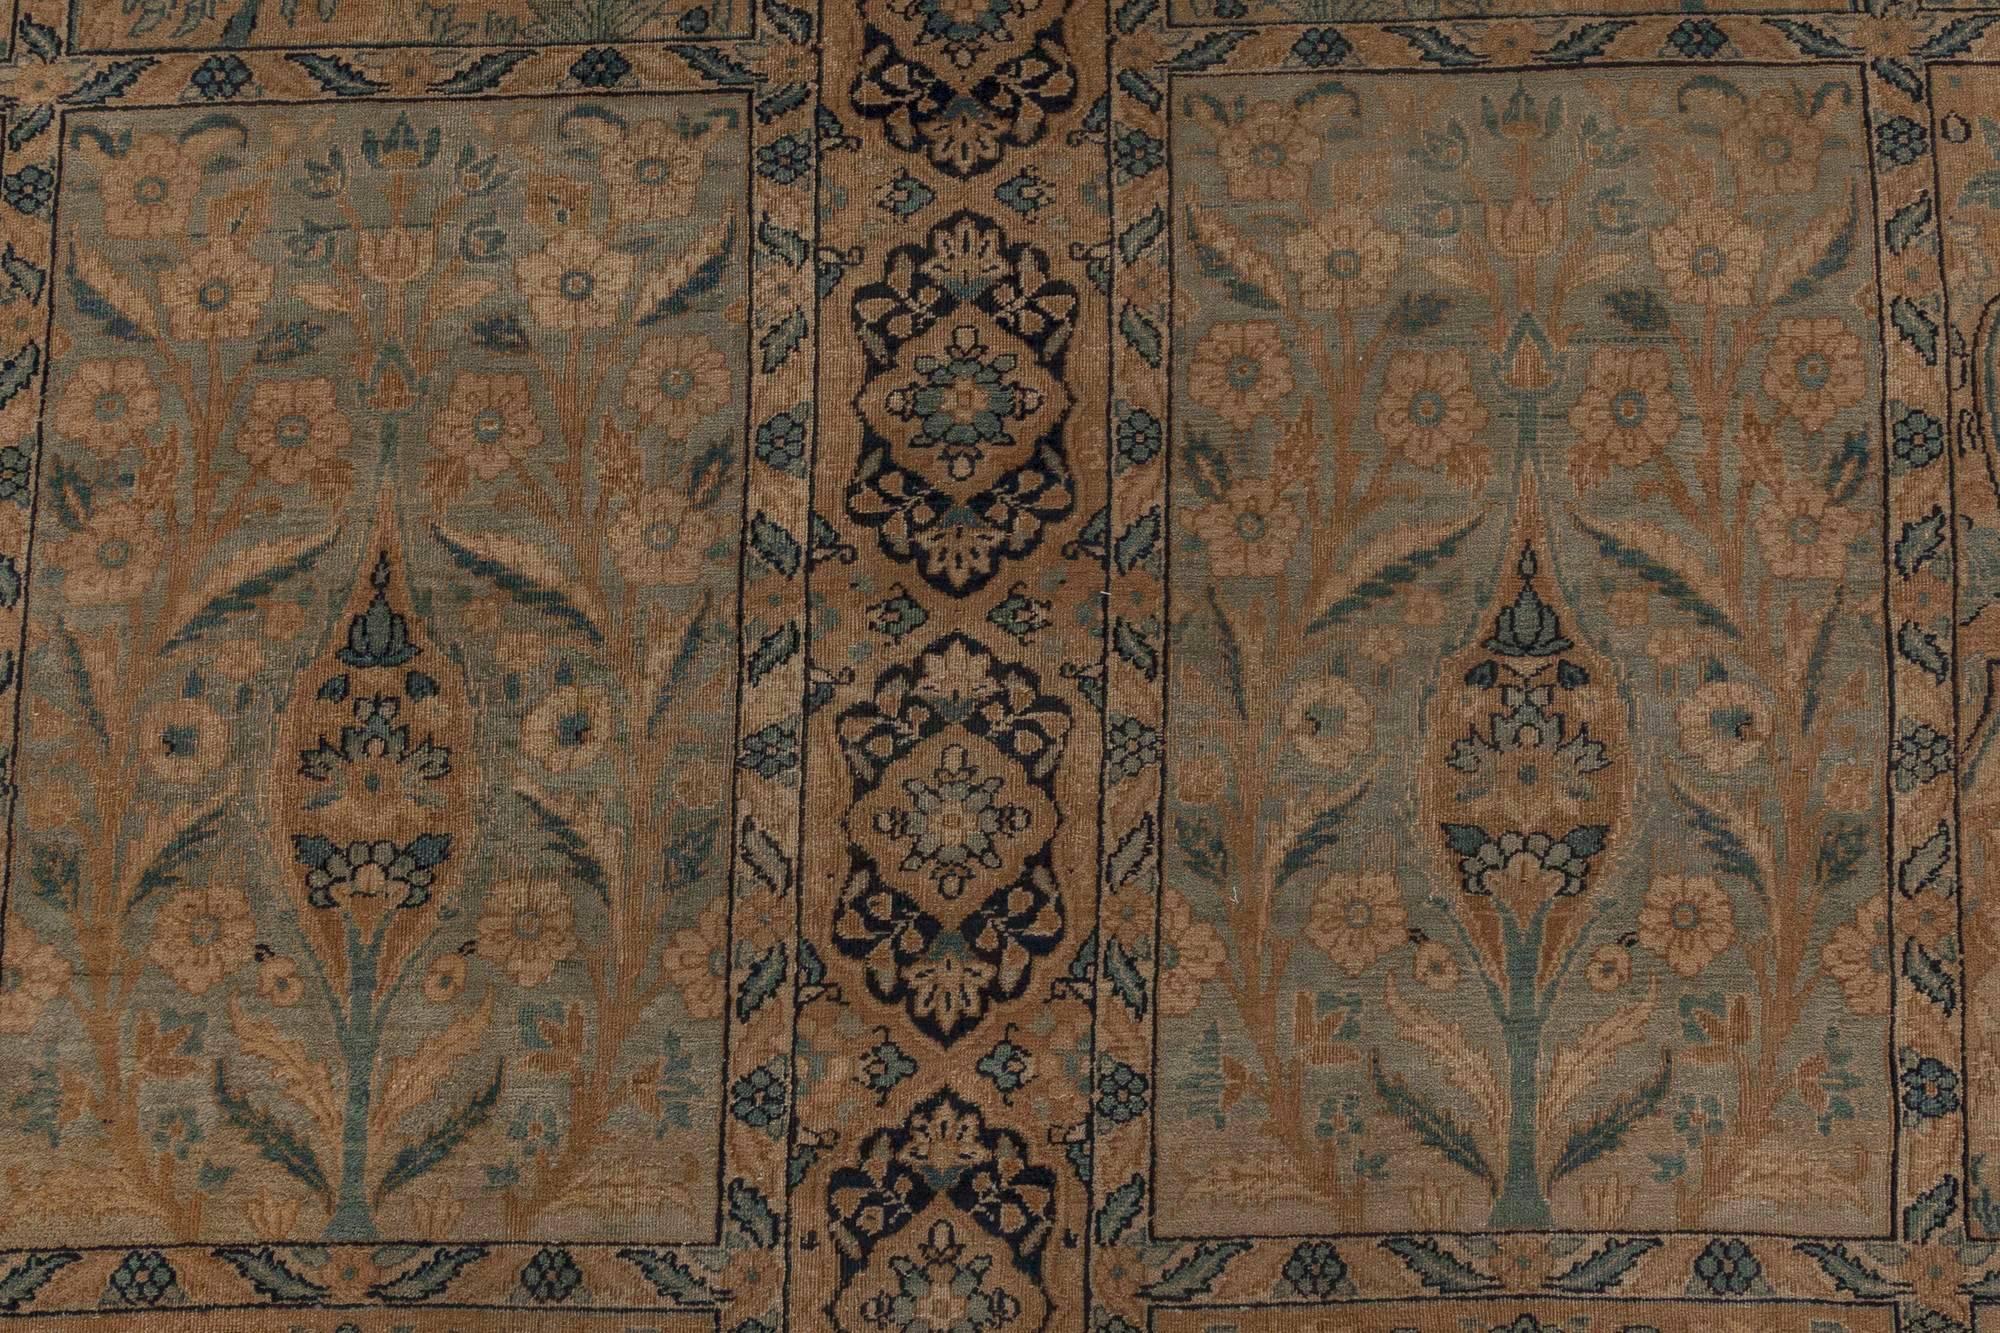 Antique Persian Kirman Rug
Size: 12'8